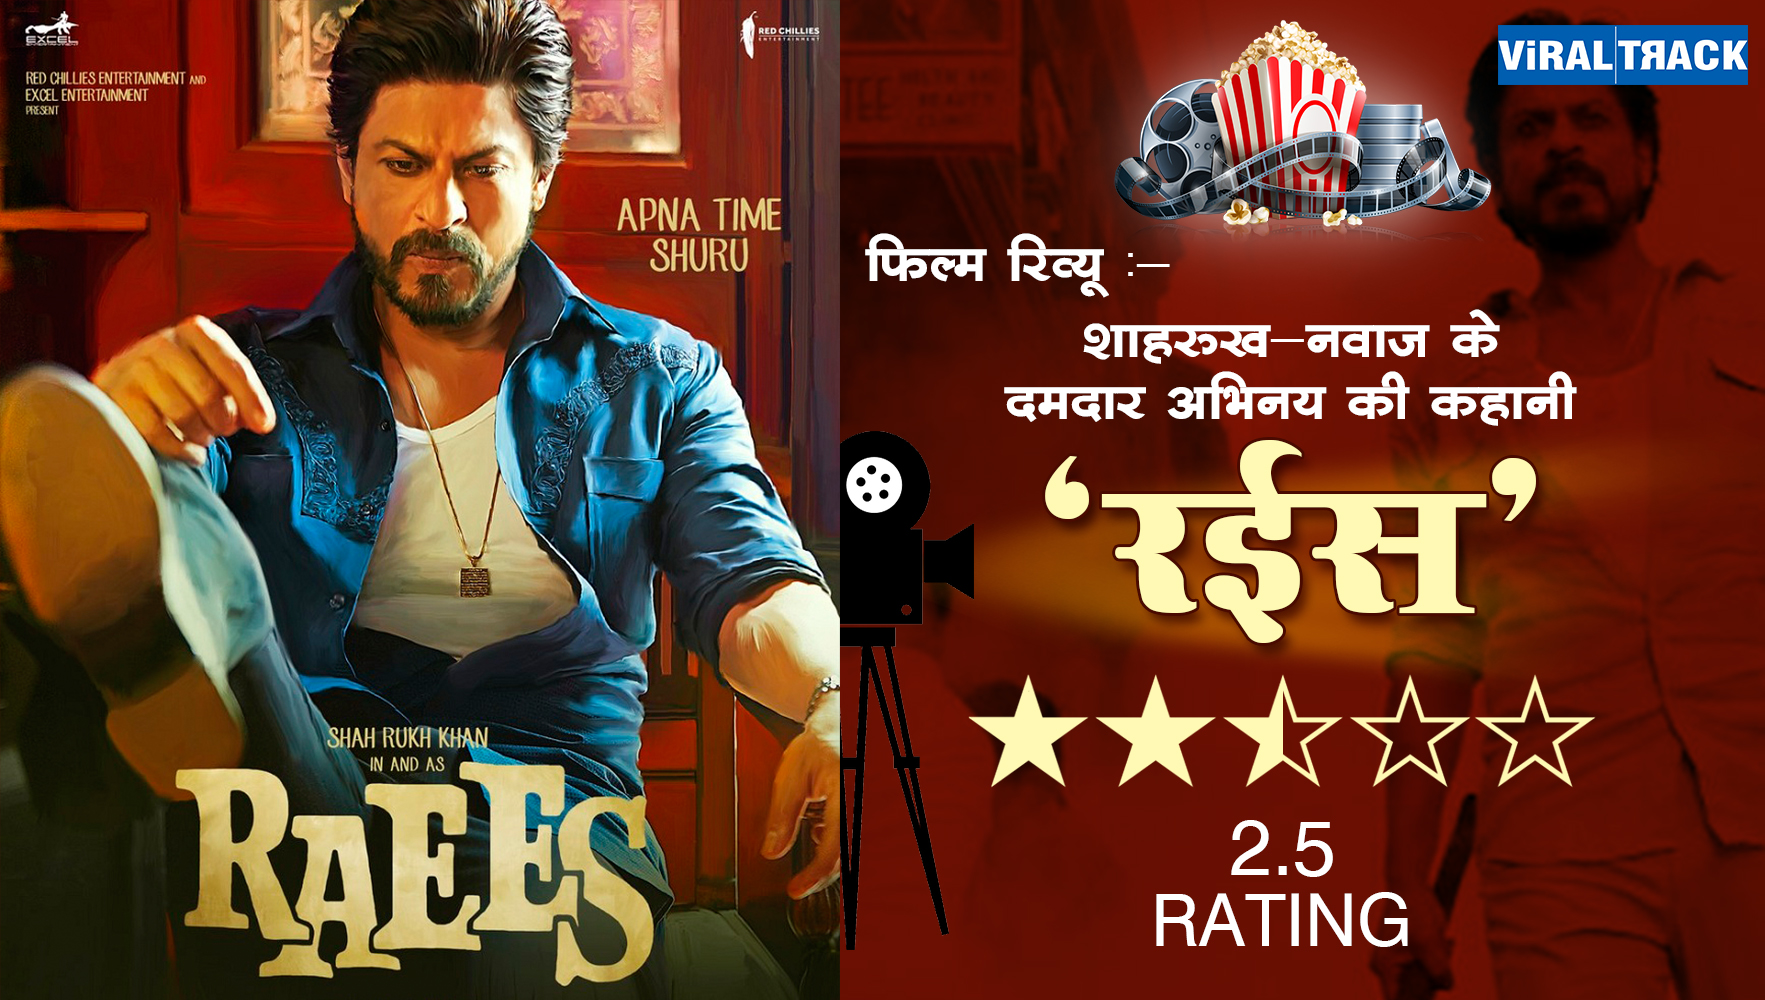 shahrukh khan raees movie review